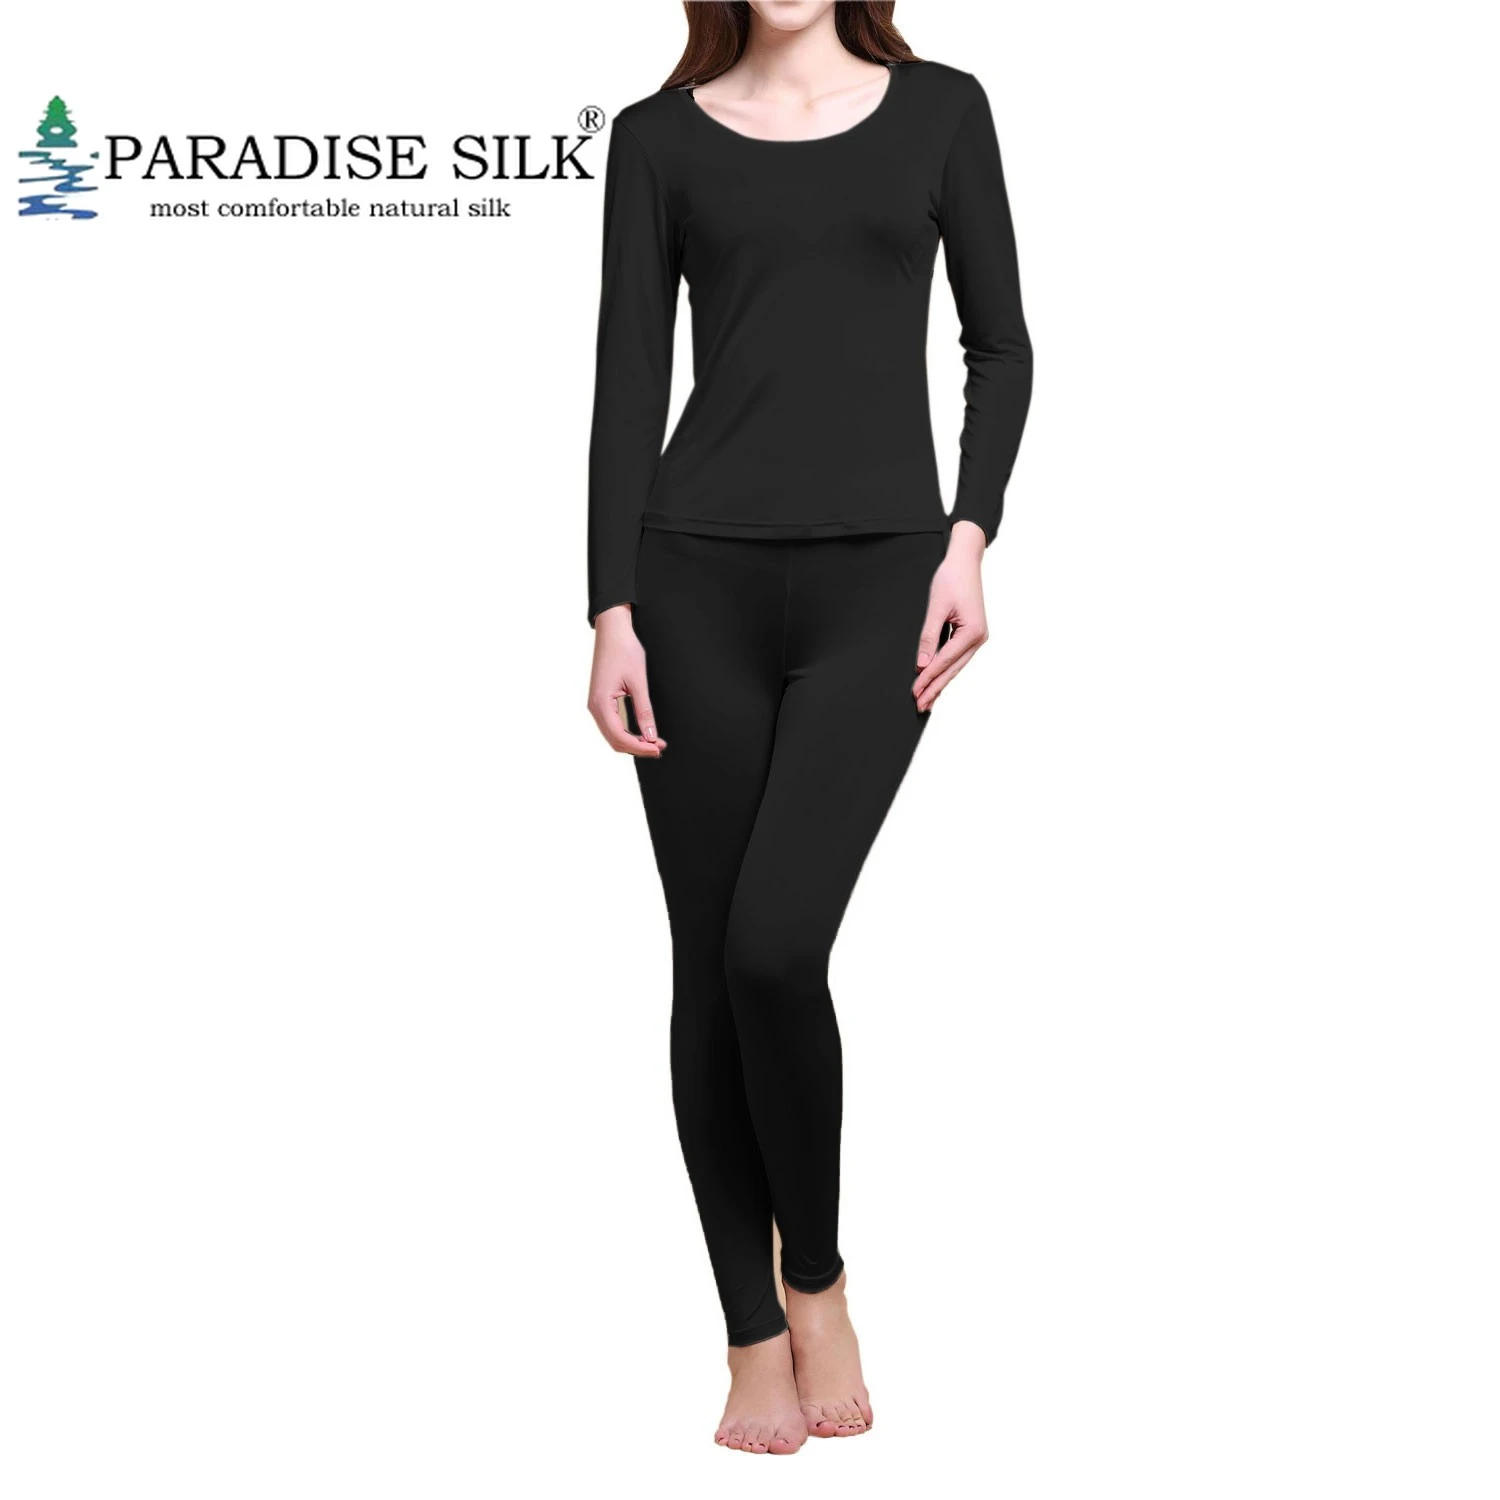 100% Pure Knit Silk Men's Long Warm Thermal Underwear Pajama Set L 2XL 4 Color